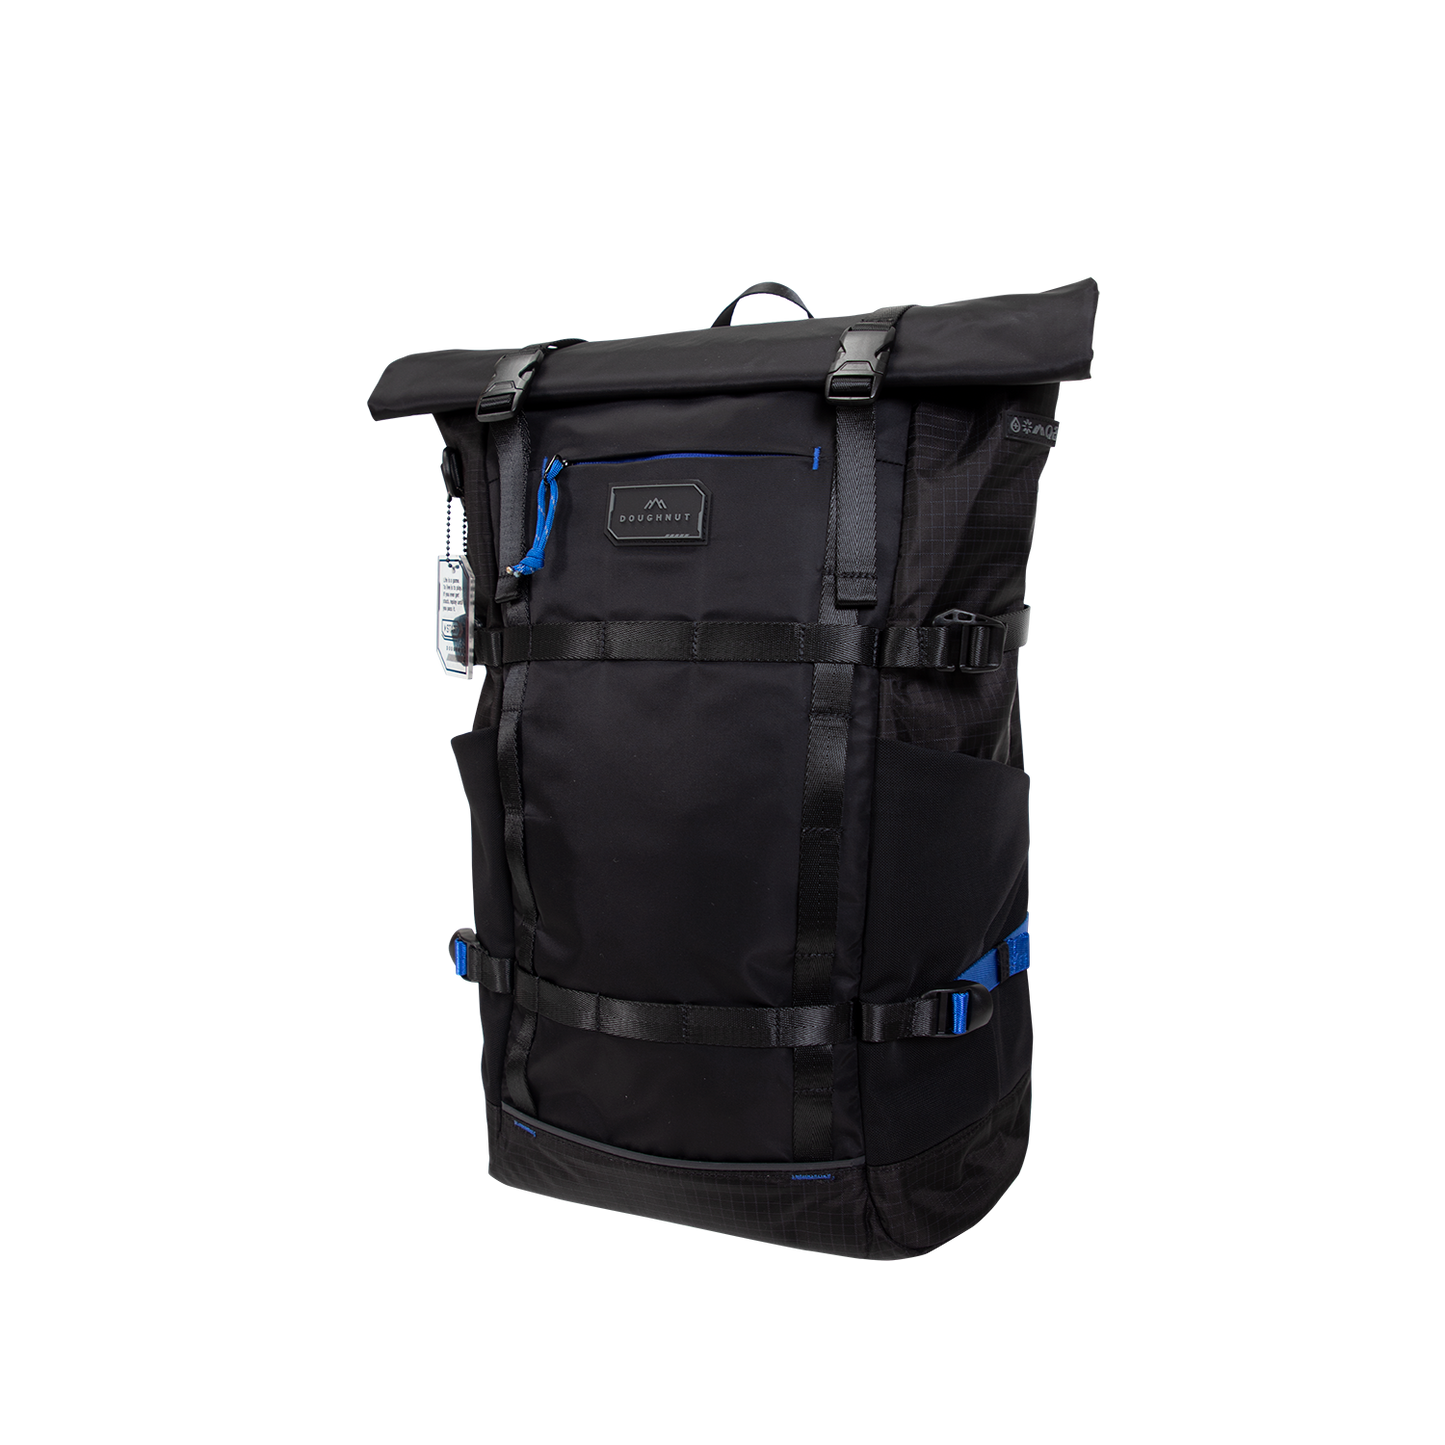 Paratrooper Backpack